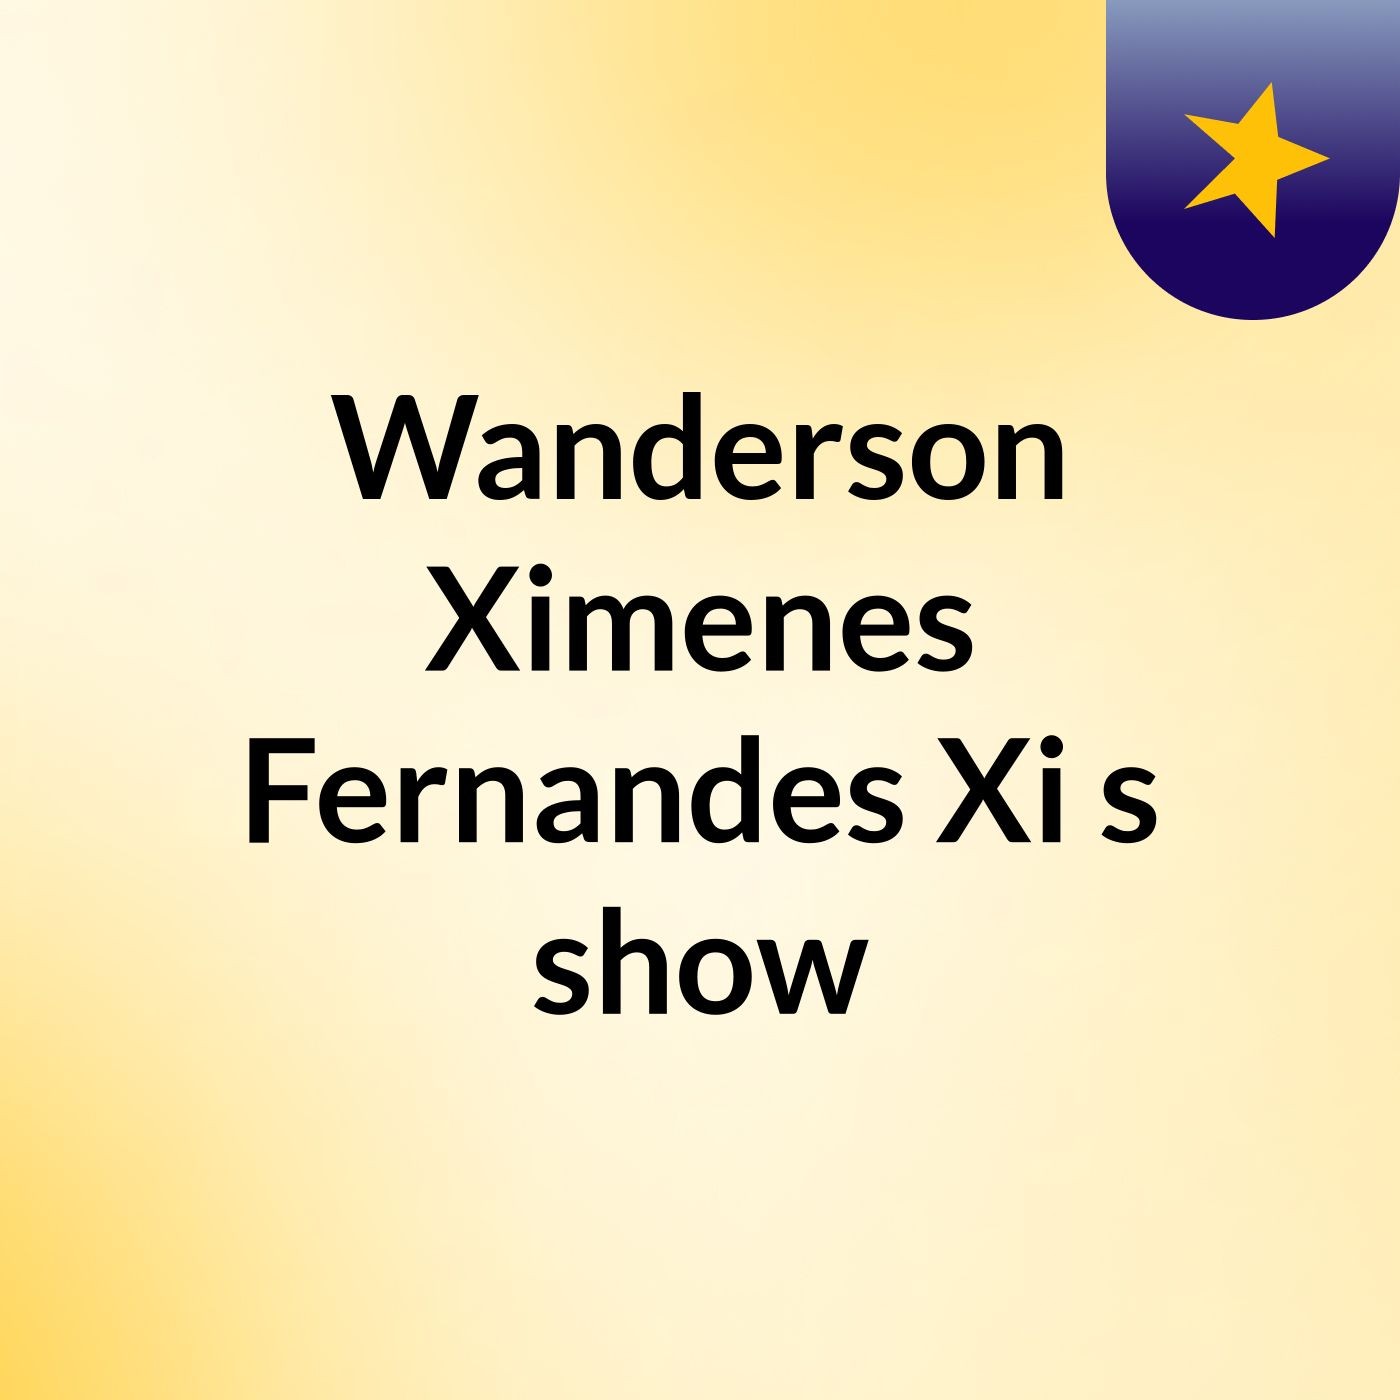 Wanderson Ximenes Fernandes Xi's show